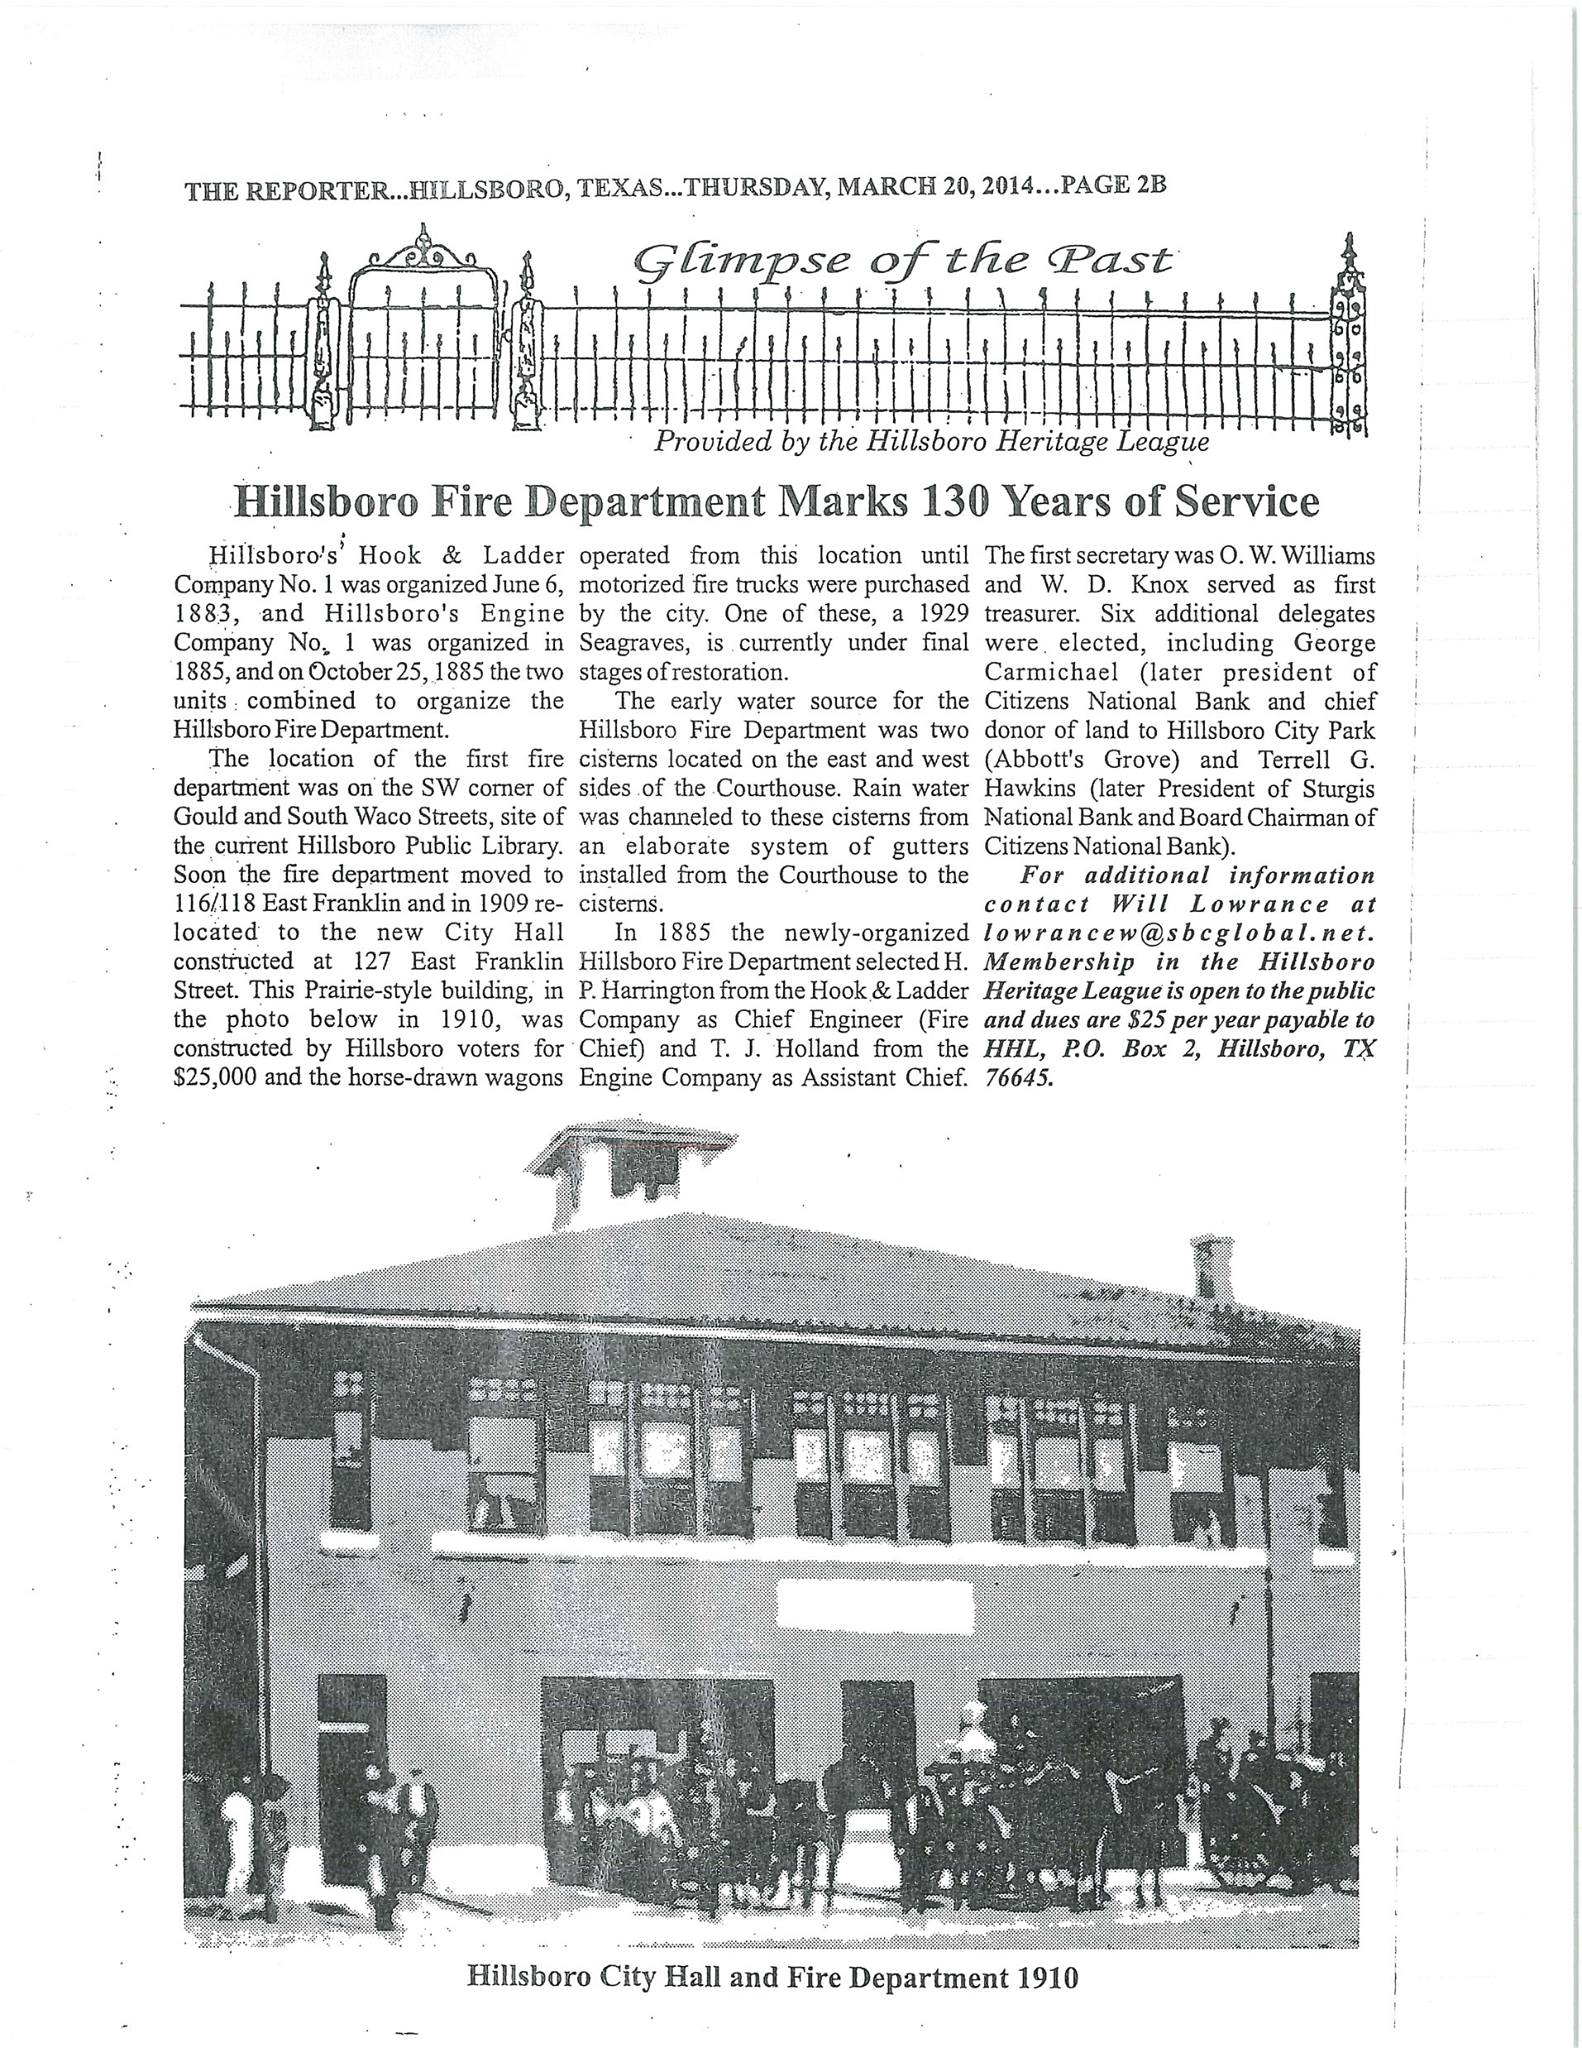 Hillsboro Fire Department history